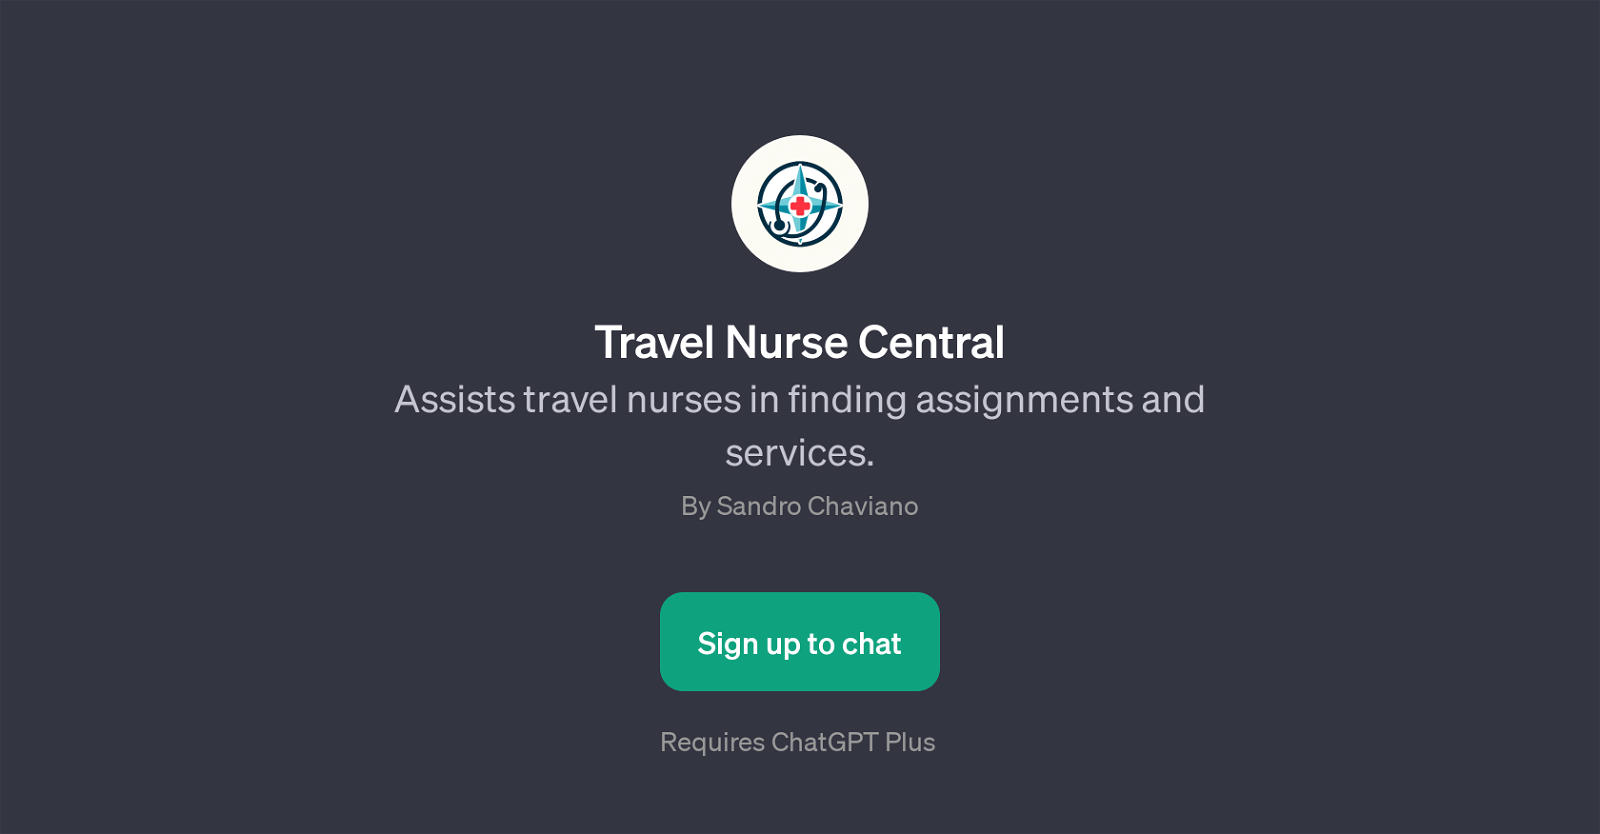 Travel Nurse Central website